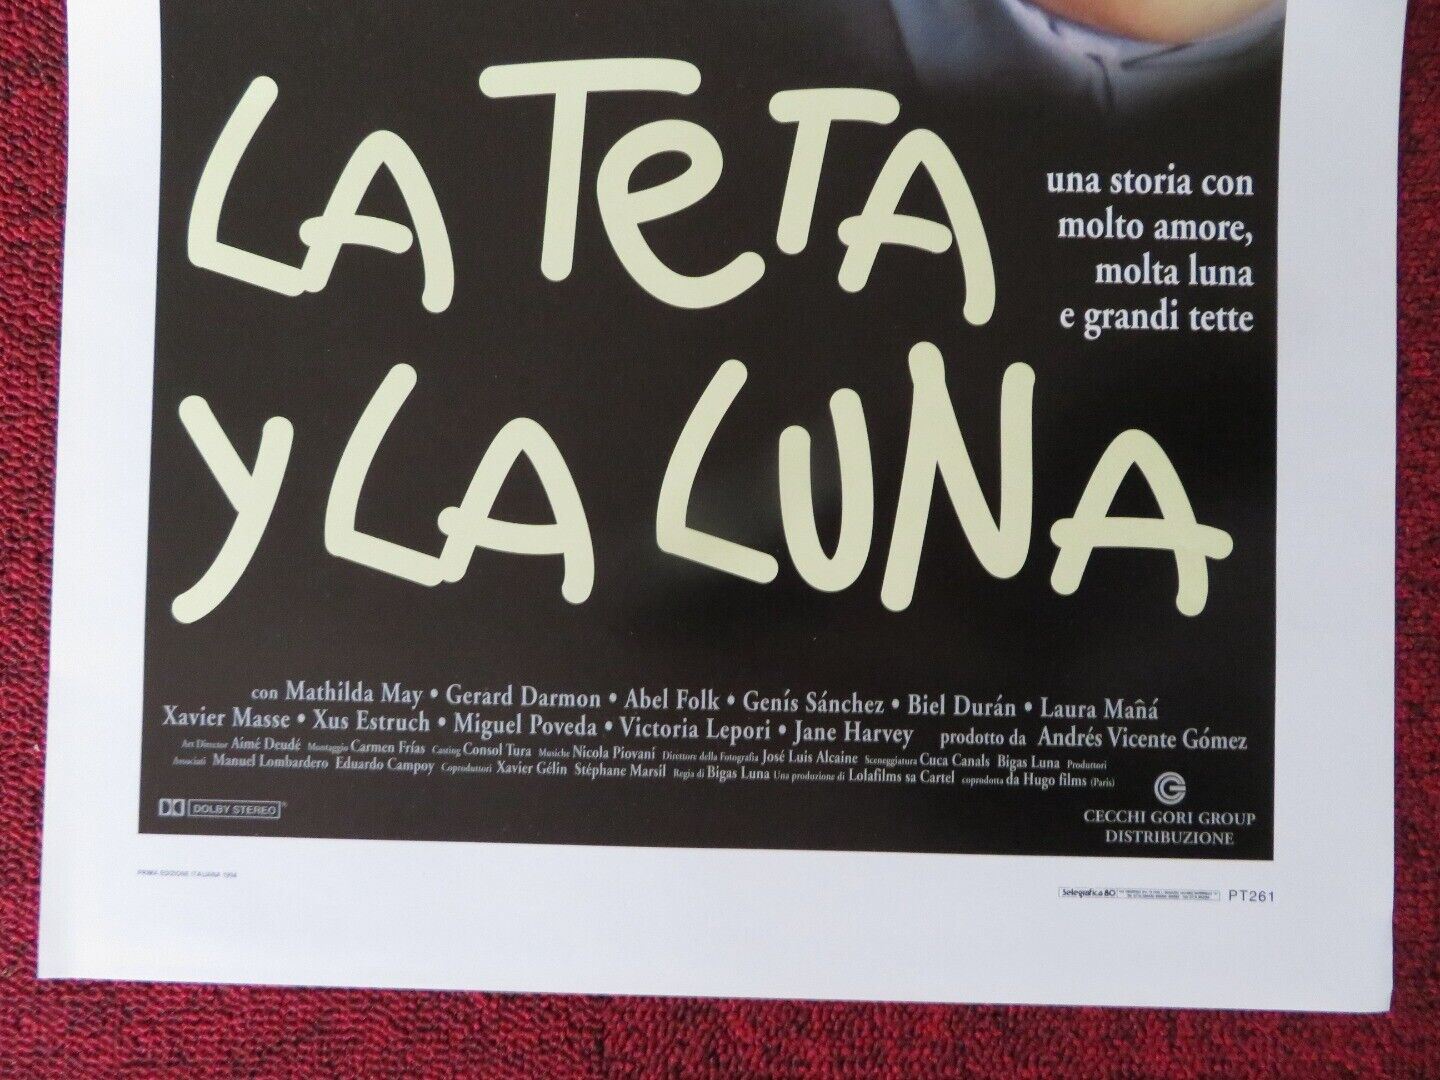 LA TETA Y LA LUNA ITALIAN LOCANDINA (27.5"x13") POSTER BIEL DURAN MATHILDA MAY